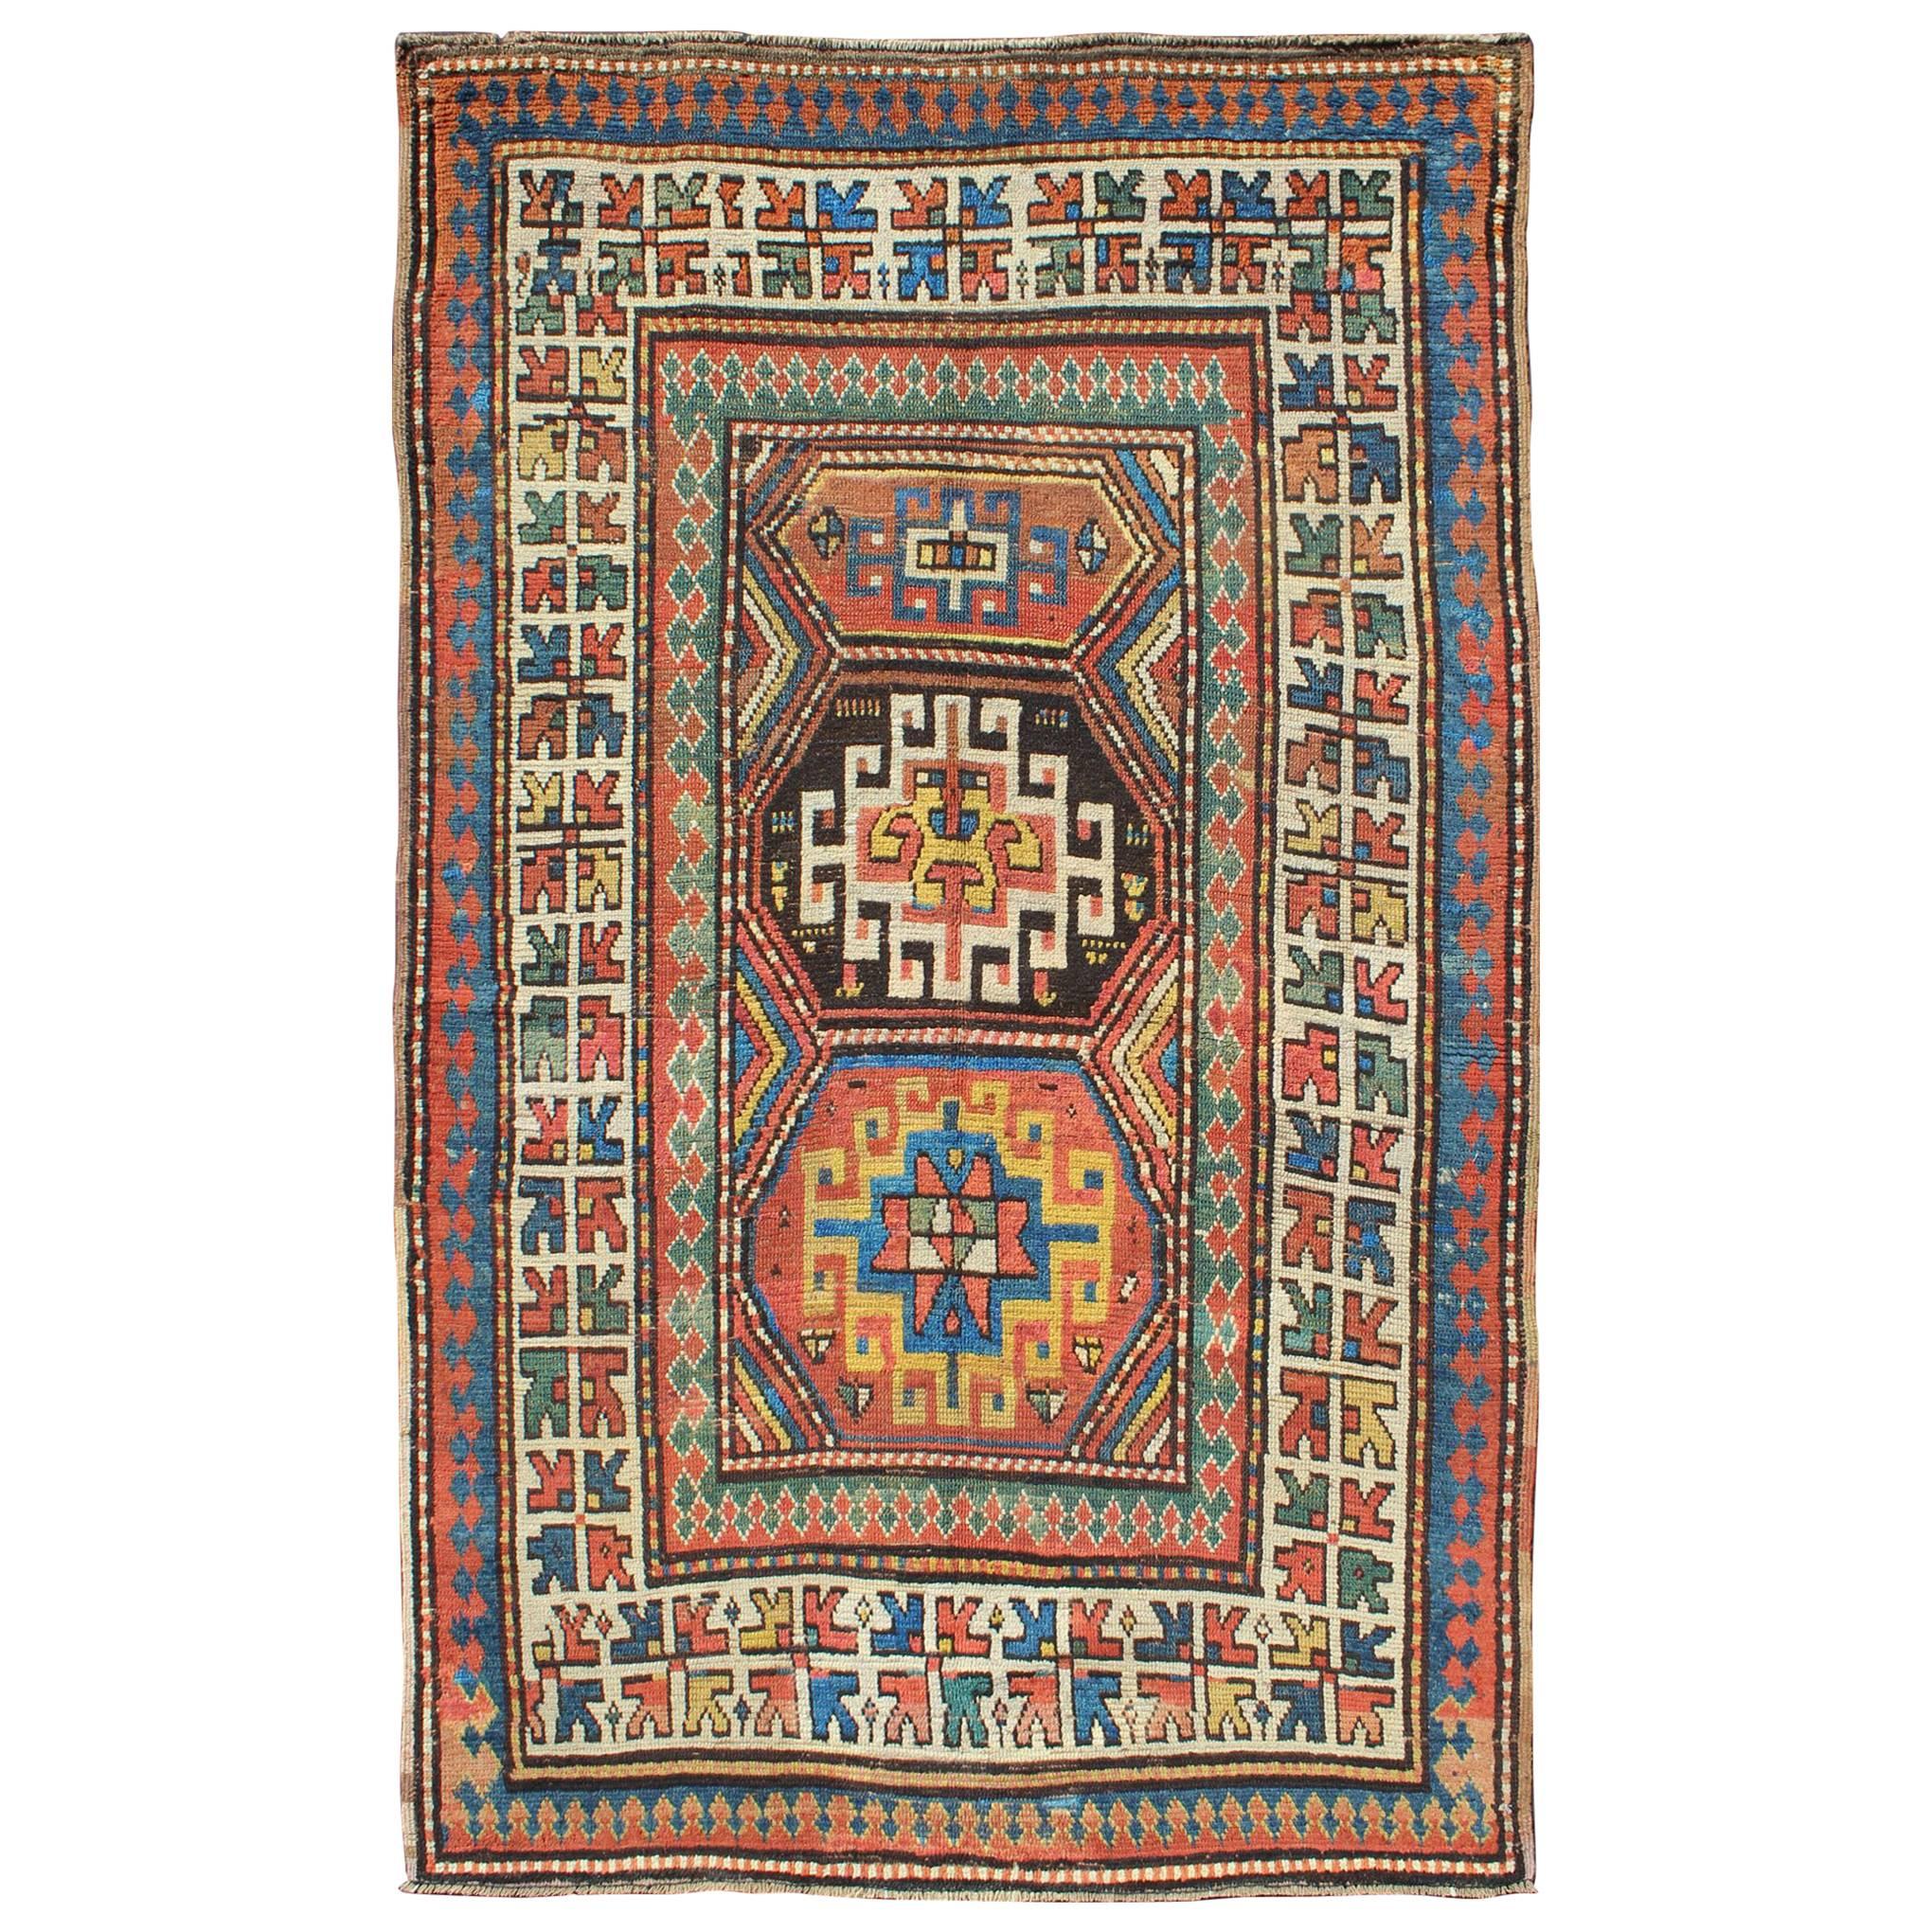 Late 19th Century Antique Kazak Carpet with Colorful Geometric Design